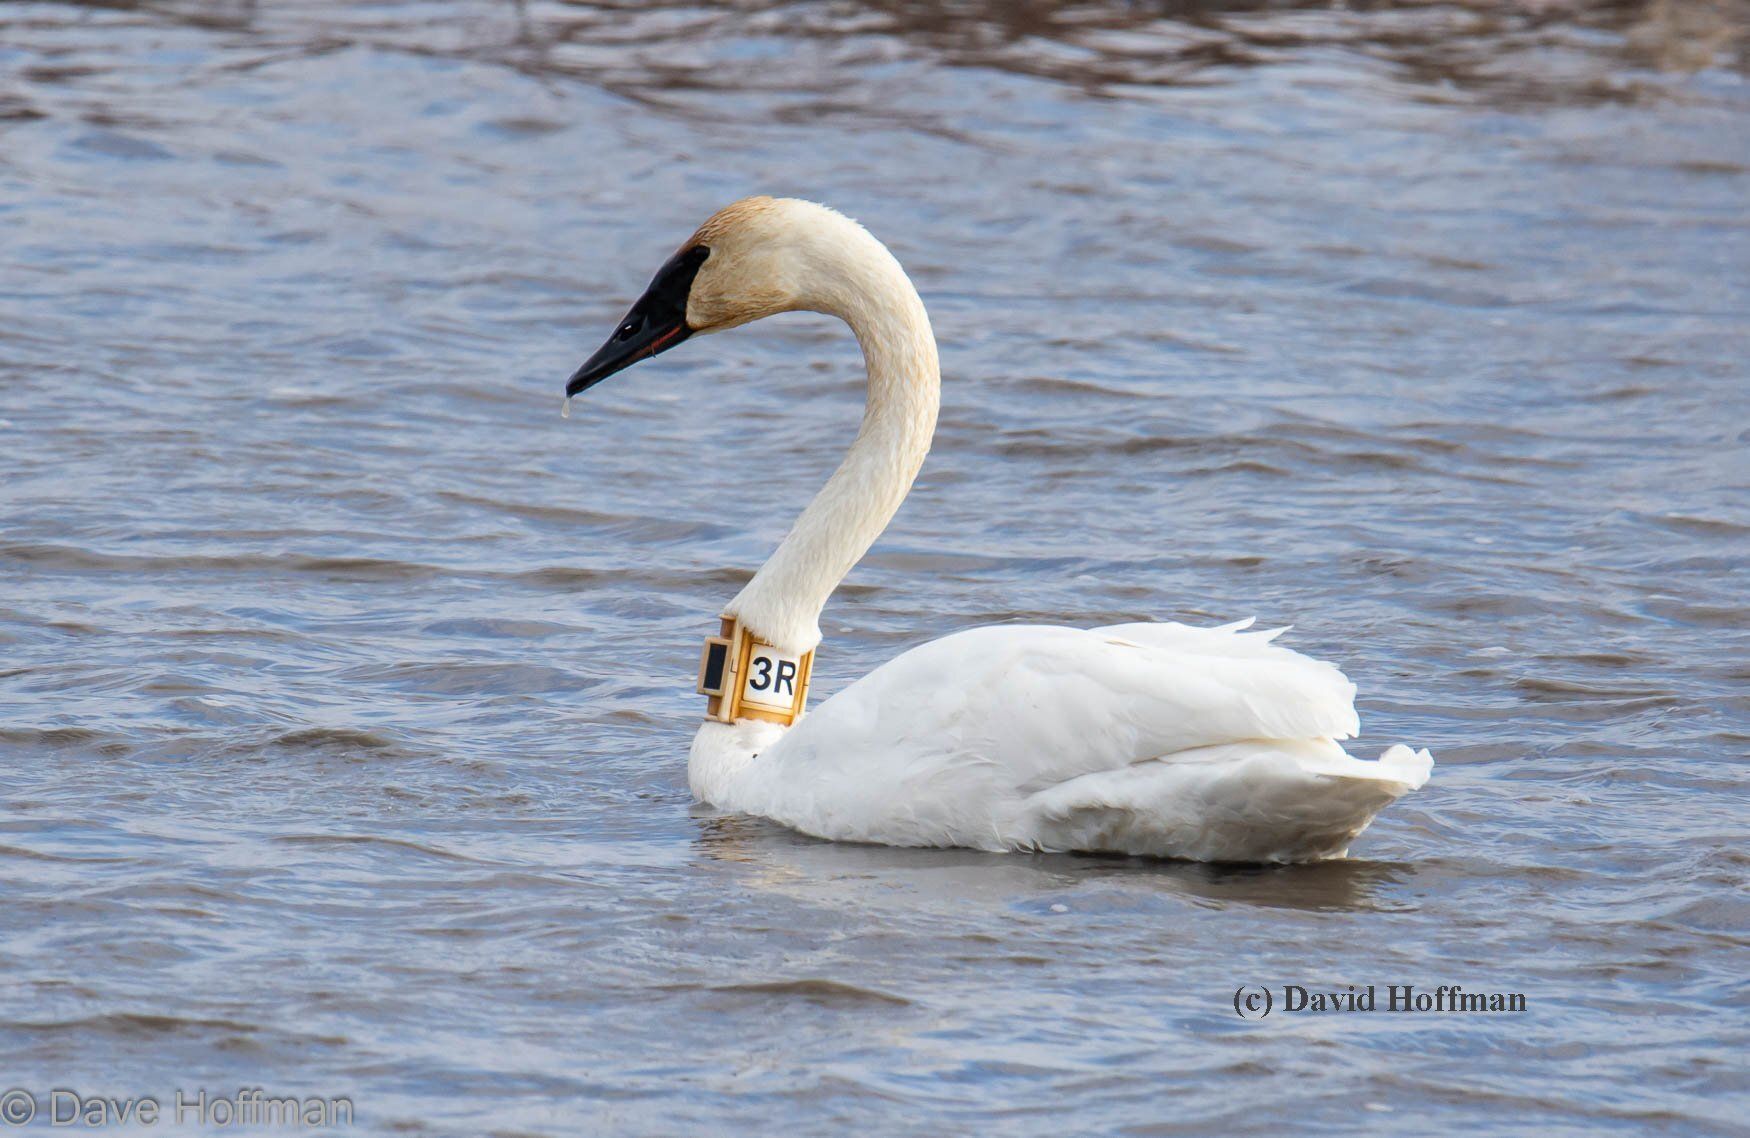 Minnesota swan 3R spends the winter in Missouri